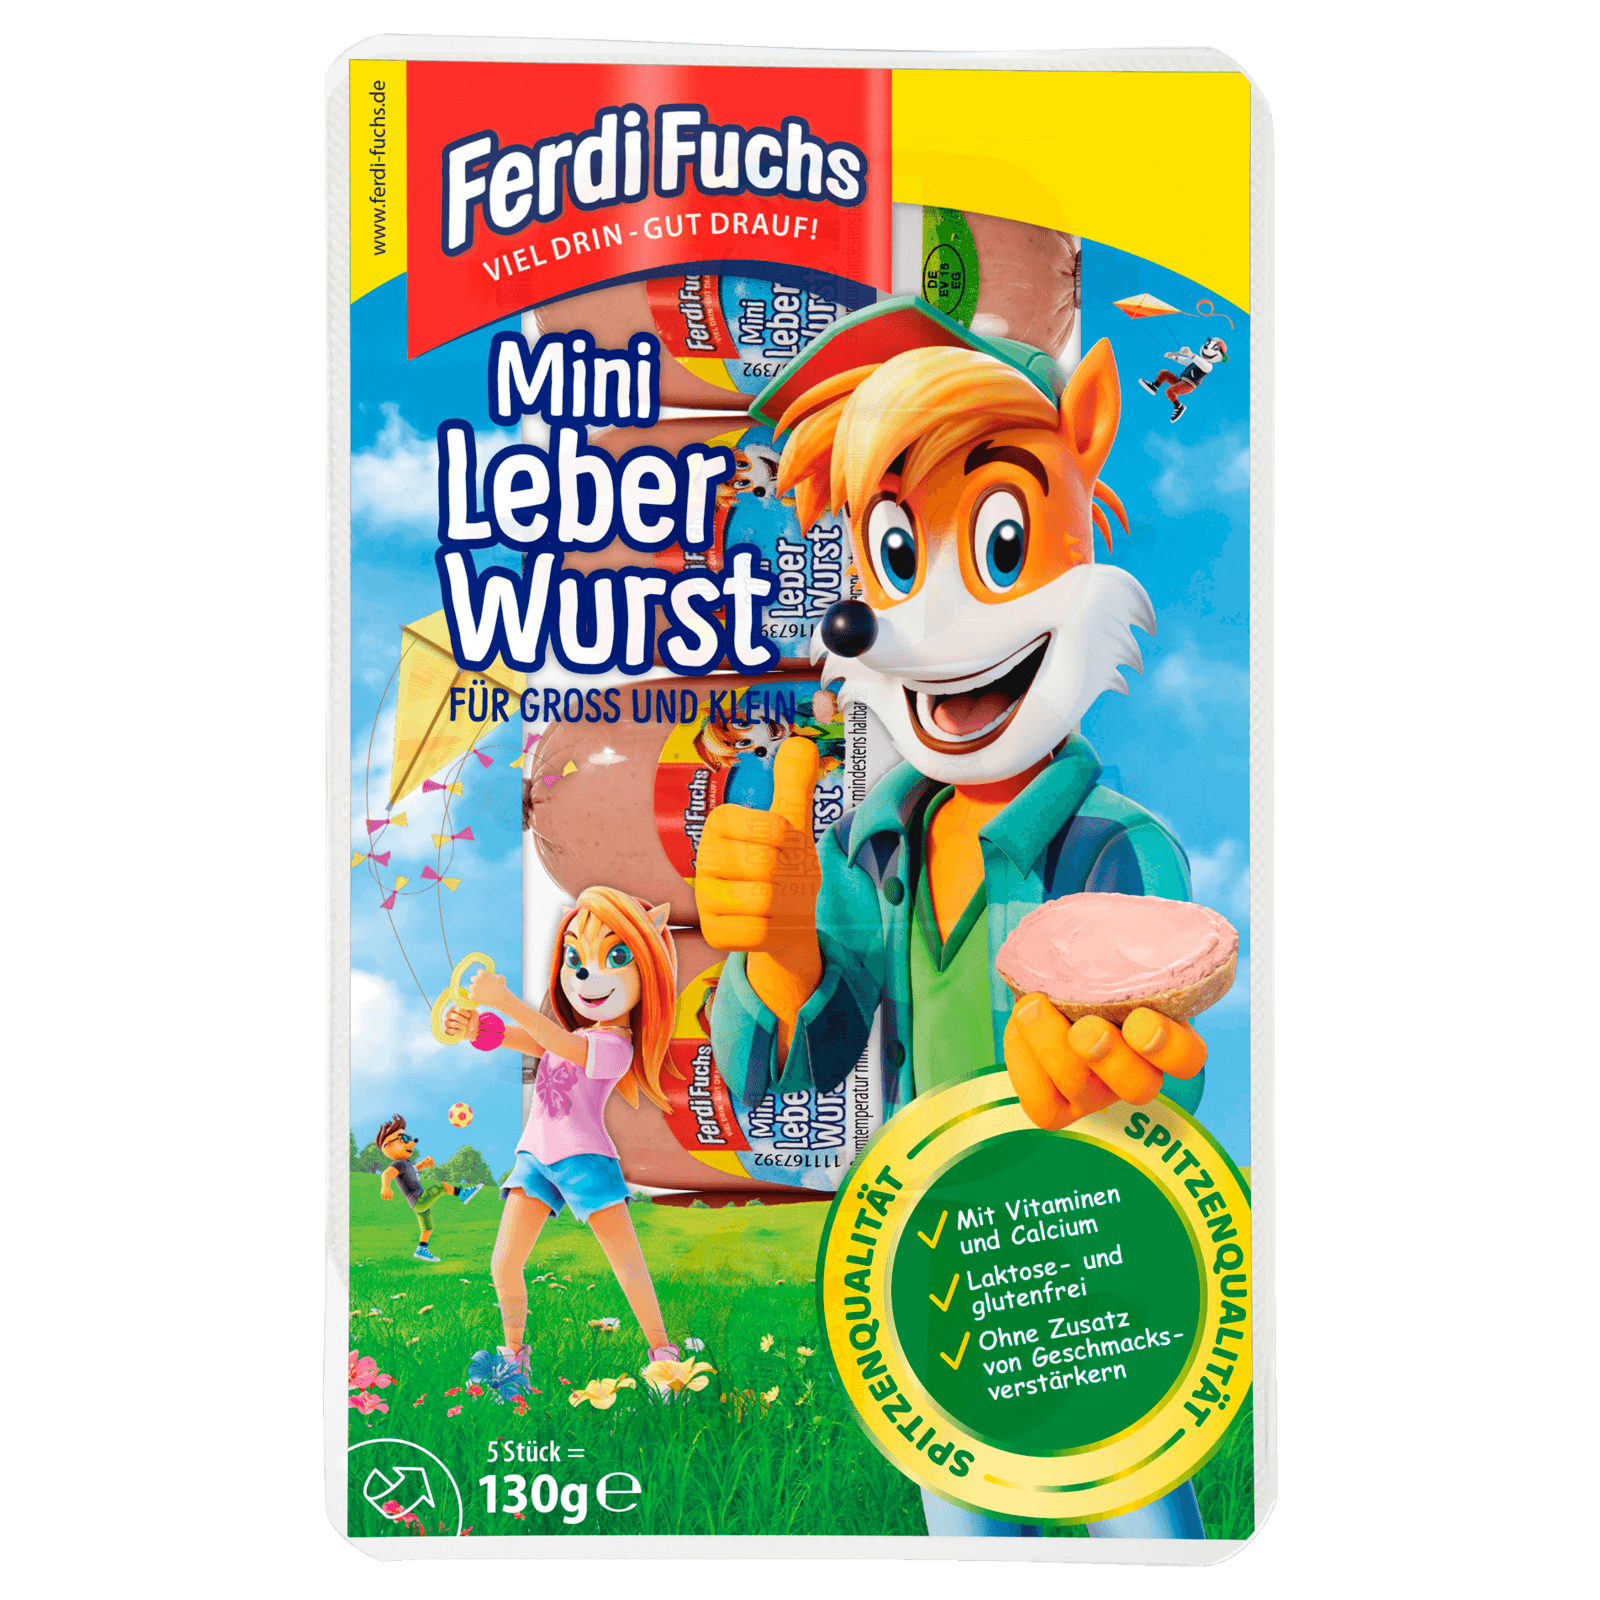 Ferdi Fuchs Mini Leberwurst 5x26g bei online REWE bestellen